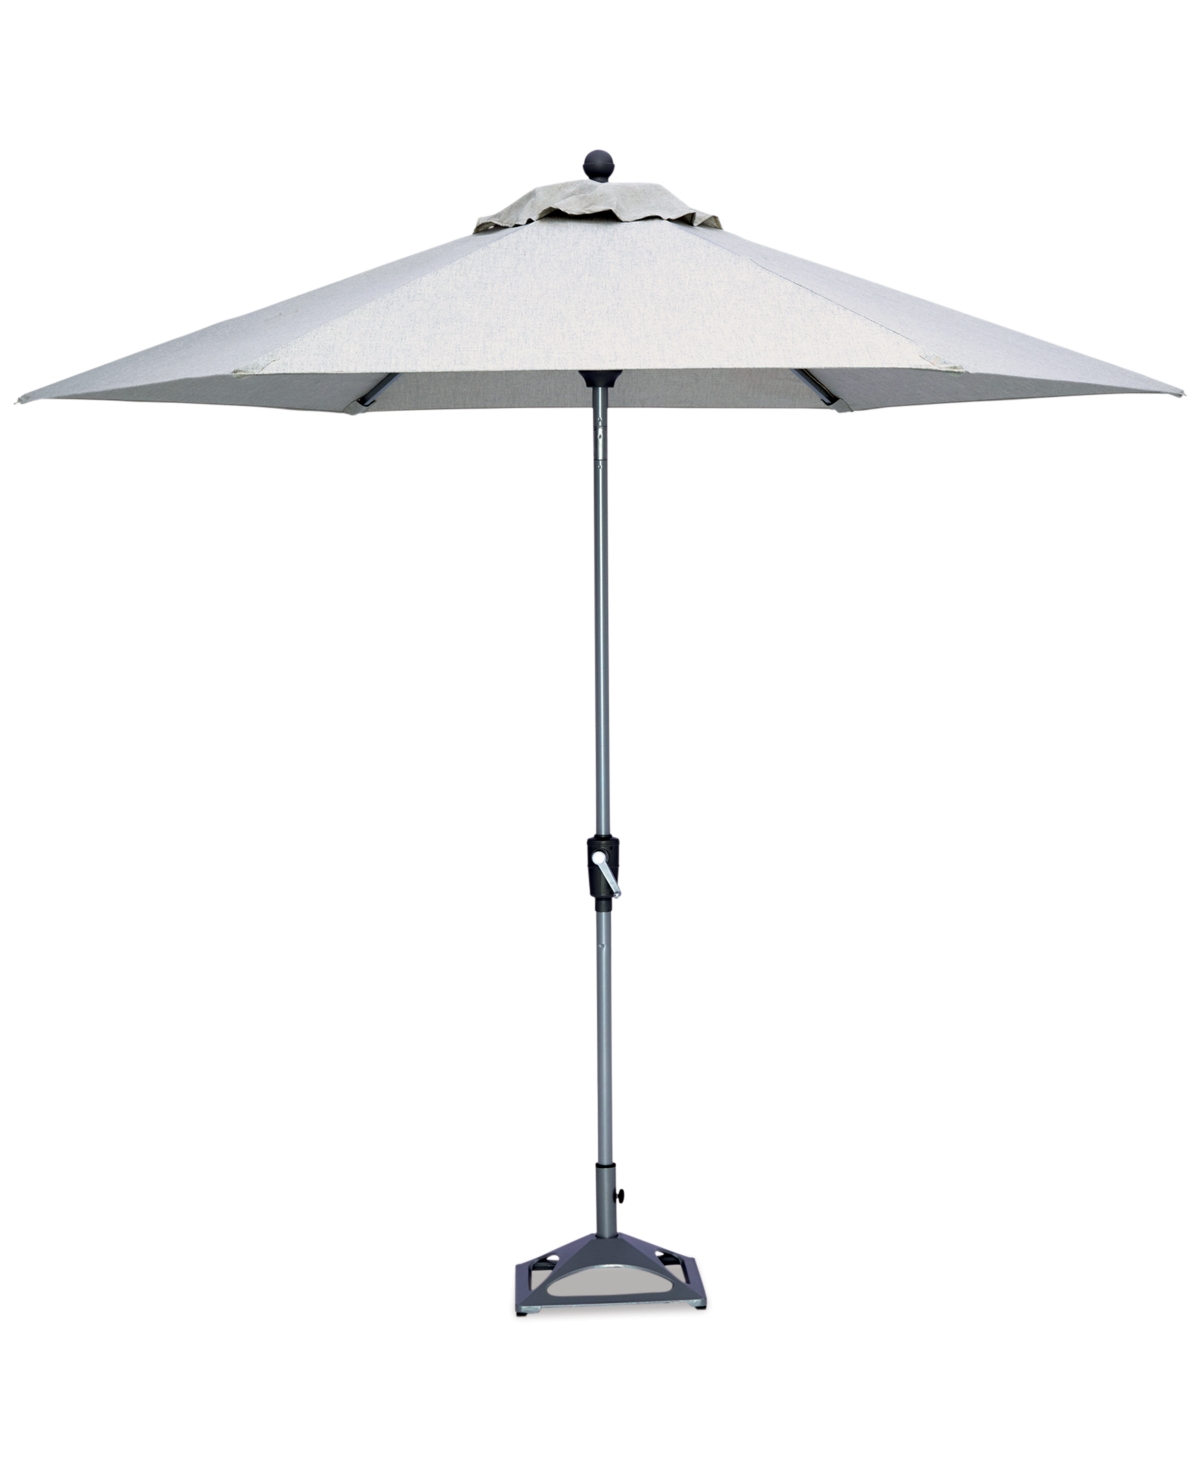 Taft Outdoor 9 Auto-Tilt Umbrella with Sunbrella Fabric and Base, Created for Macys